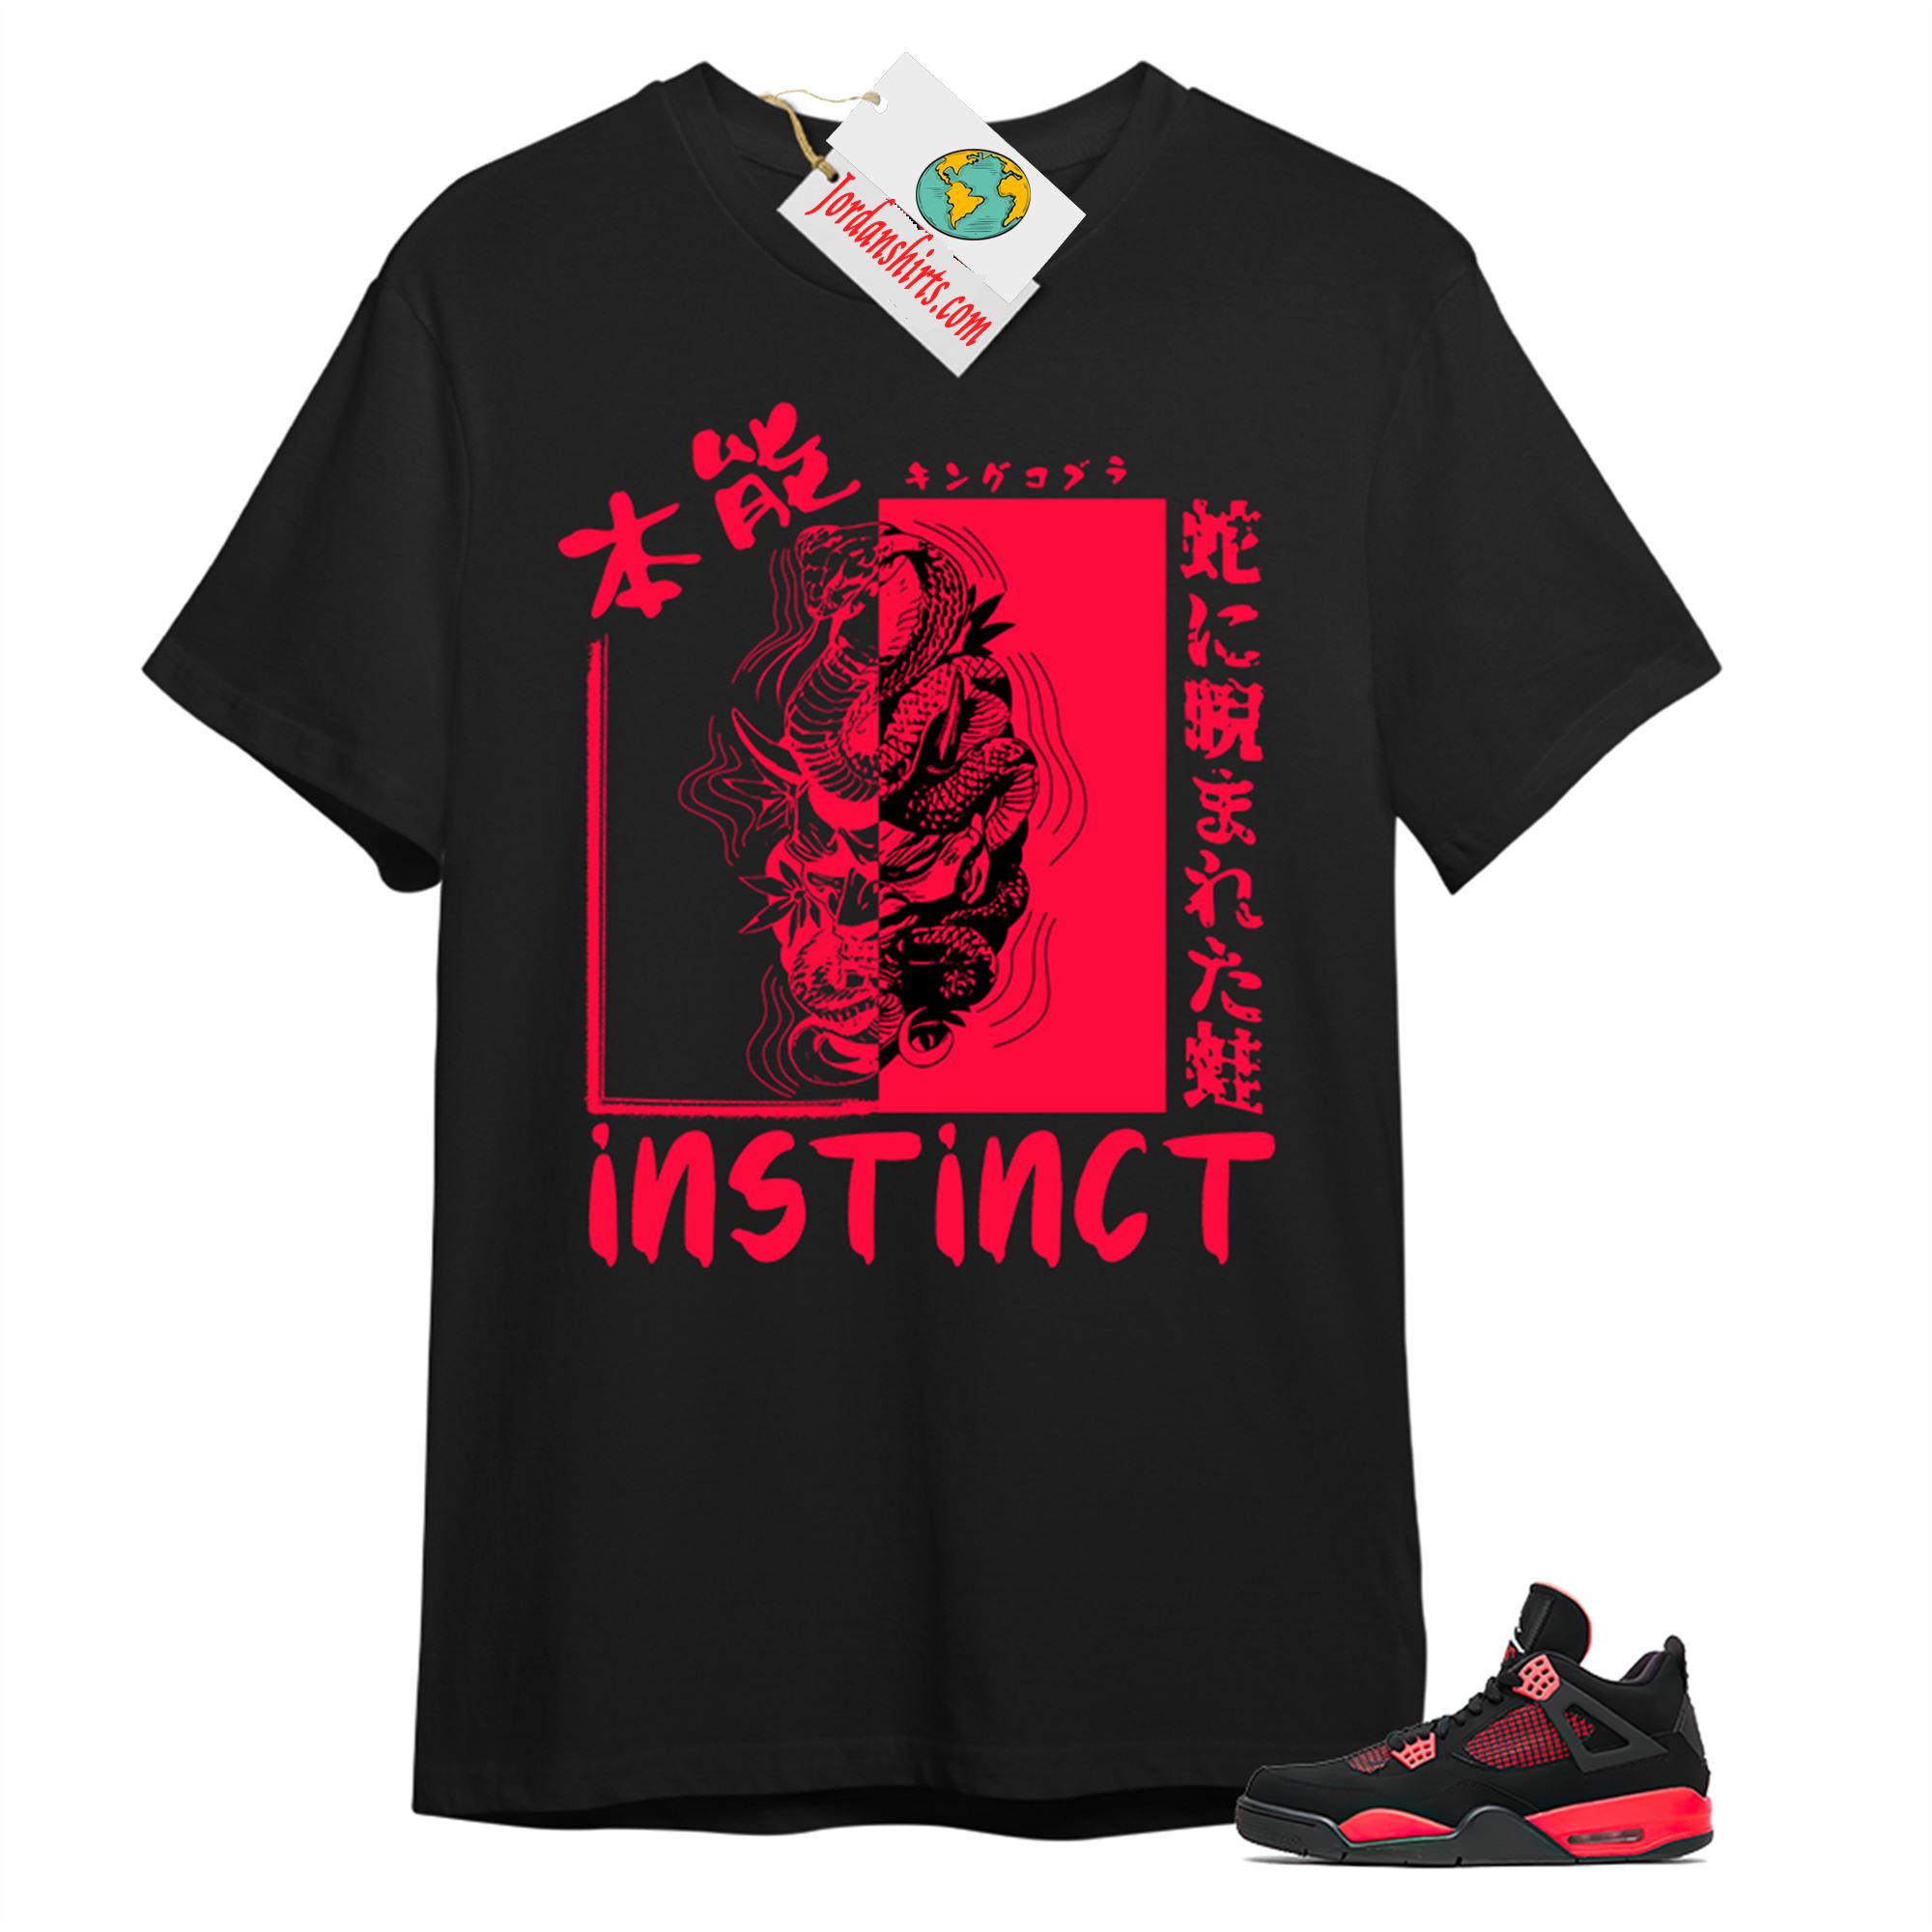 Jordan 4 Shirt, Instinct Fearless Snake Black T-shirt Air Jordan 4 Red Thunder 4s Plus Size Up To 5xl